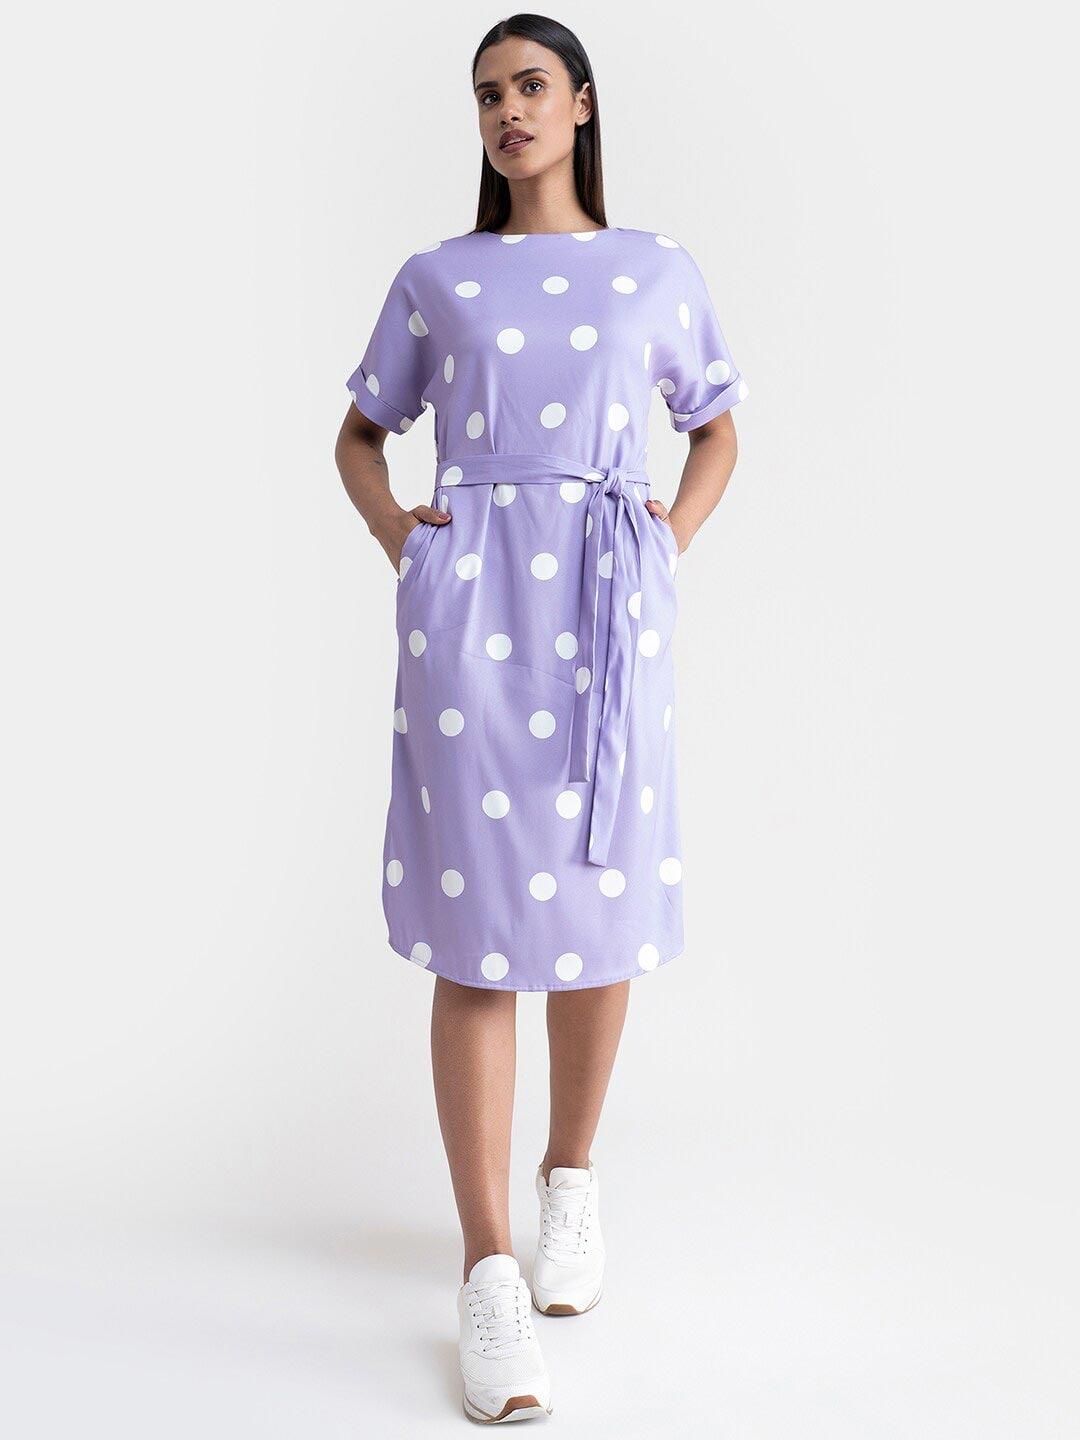 fablestreet-women-purple-polka-dot-printed-a-line-dress